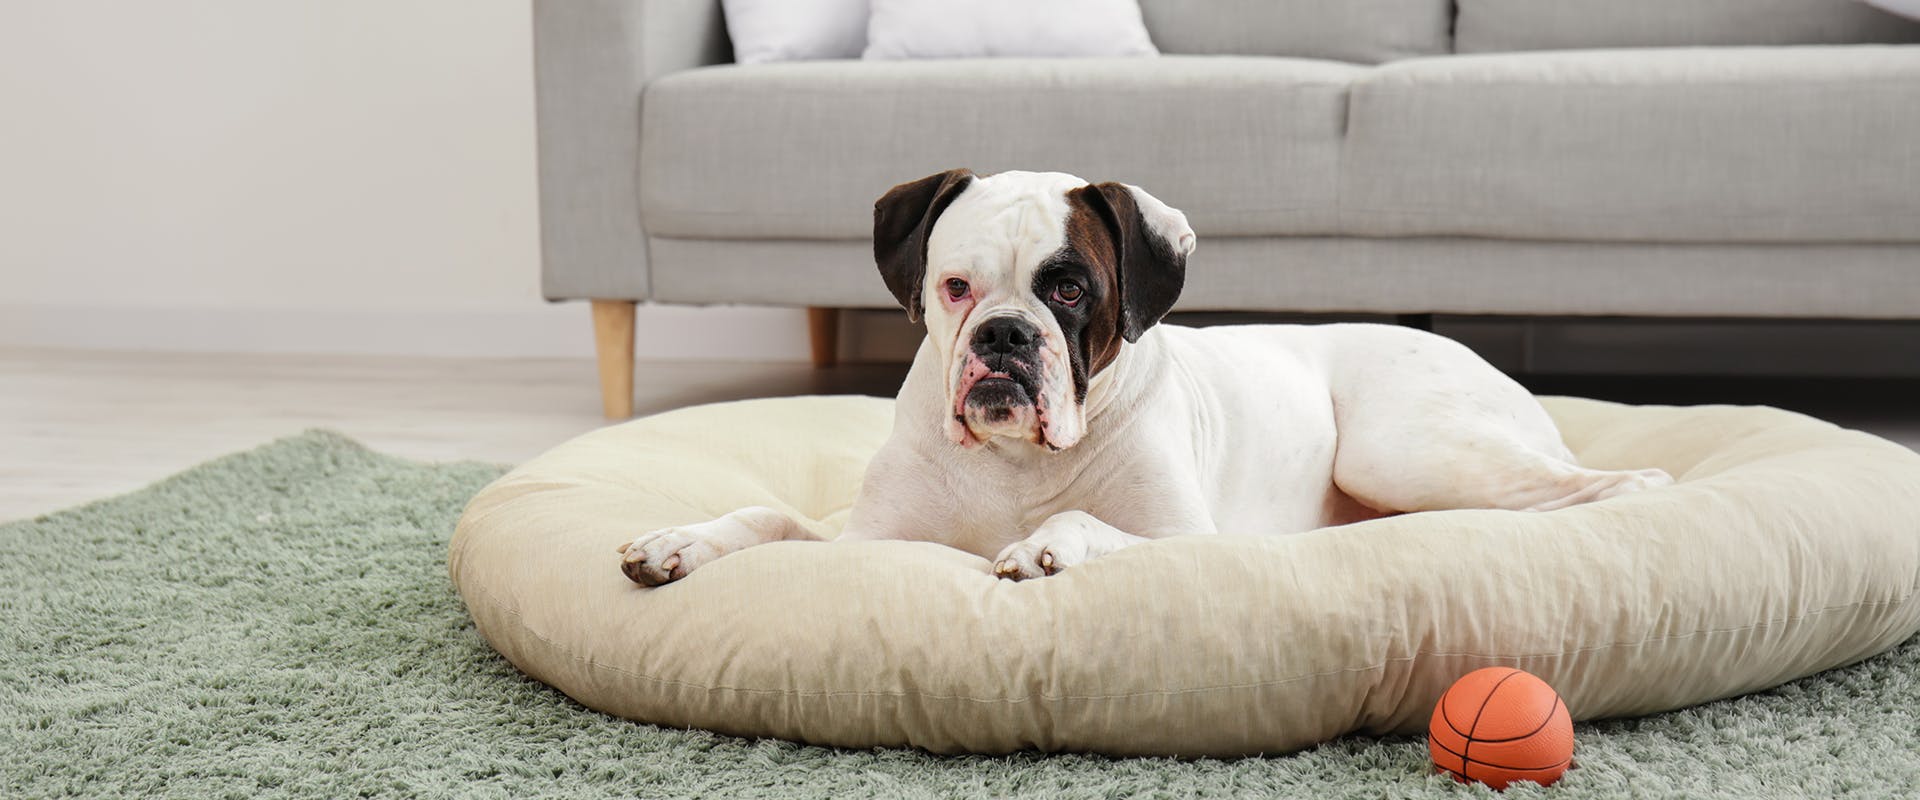 A large dog sitting on a large dog bed